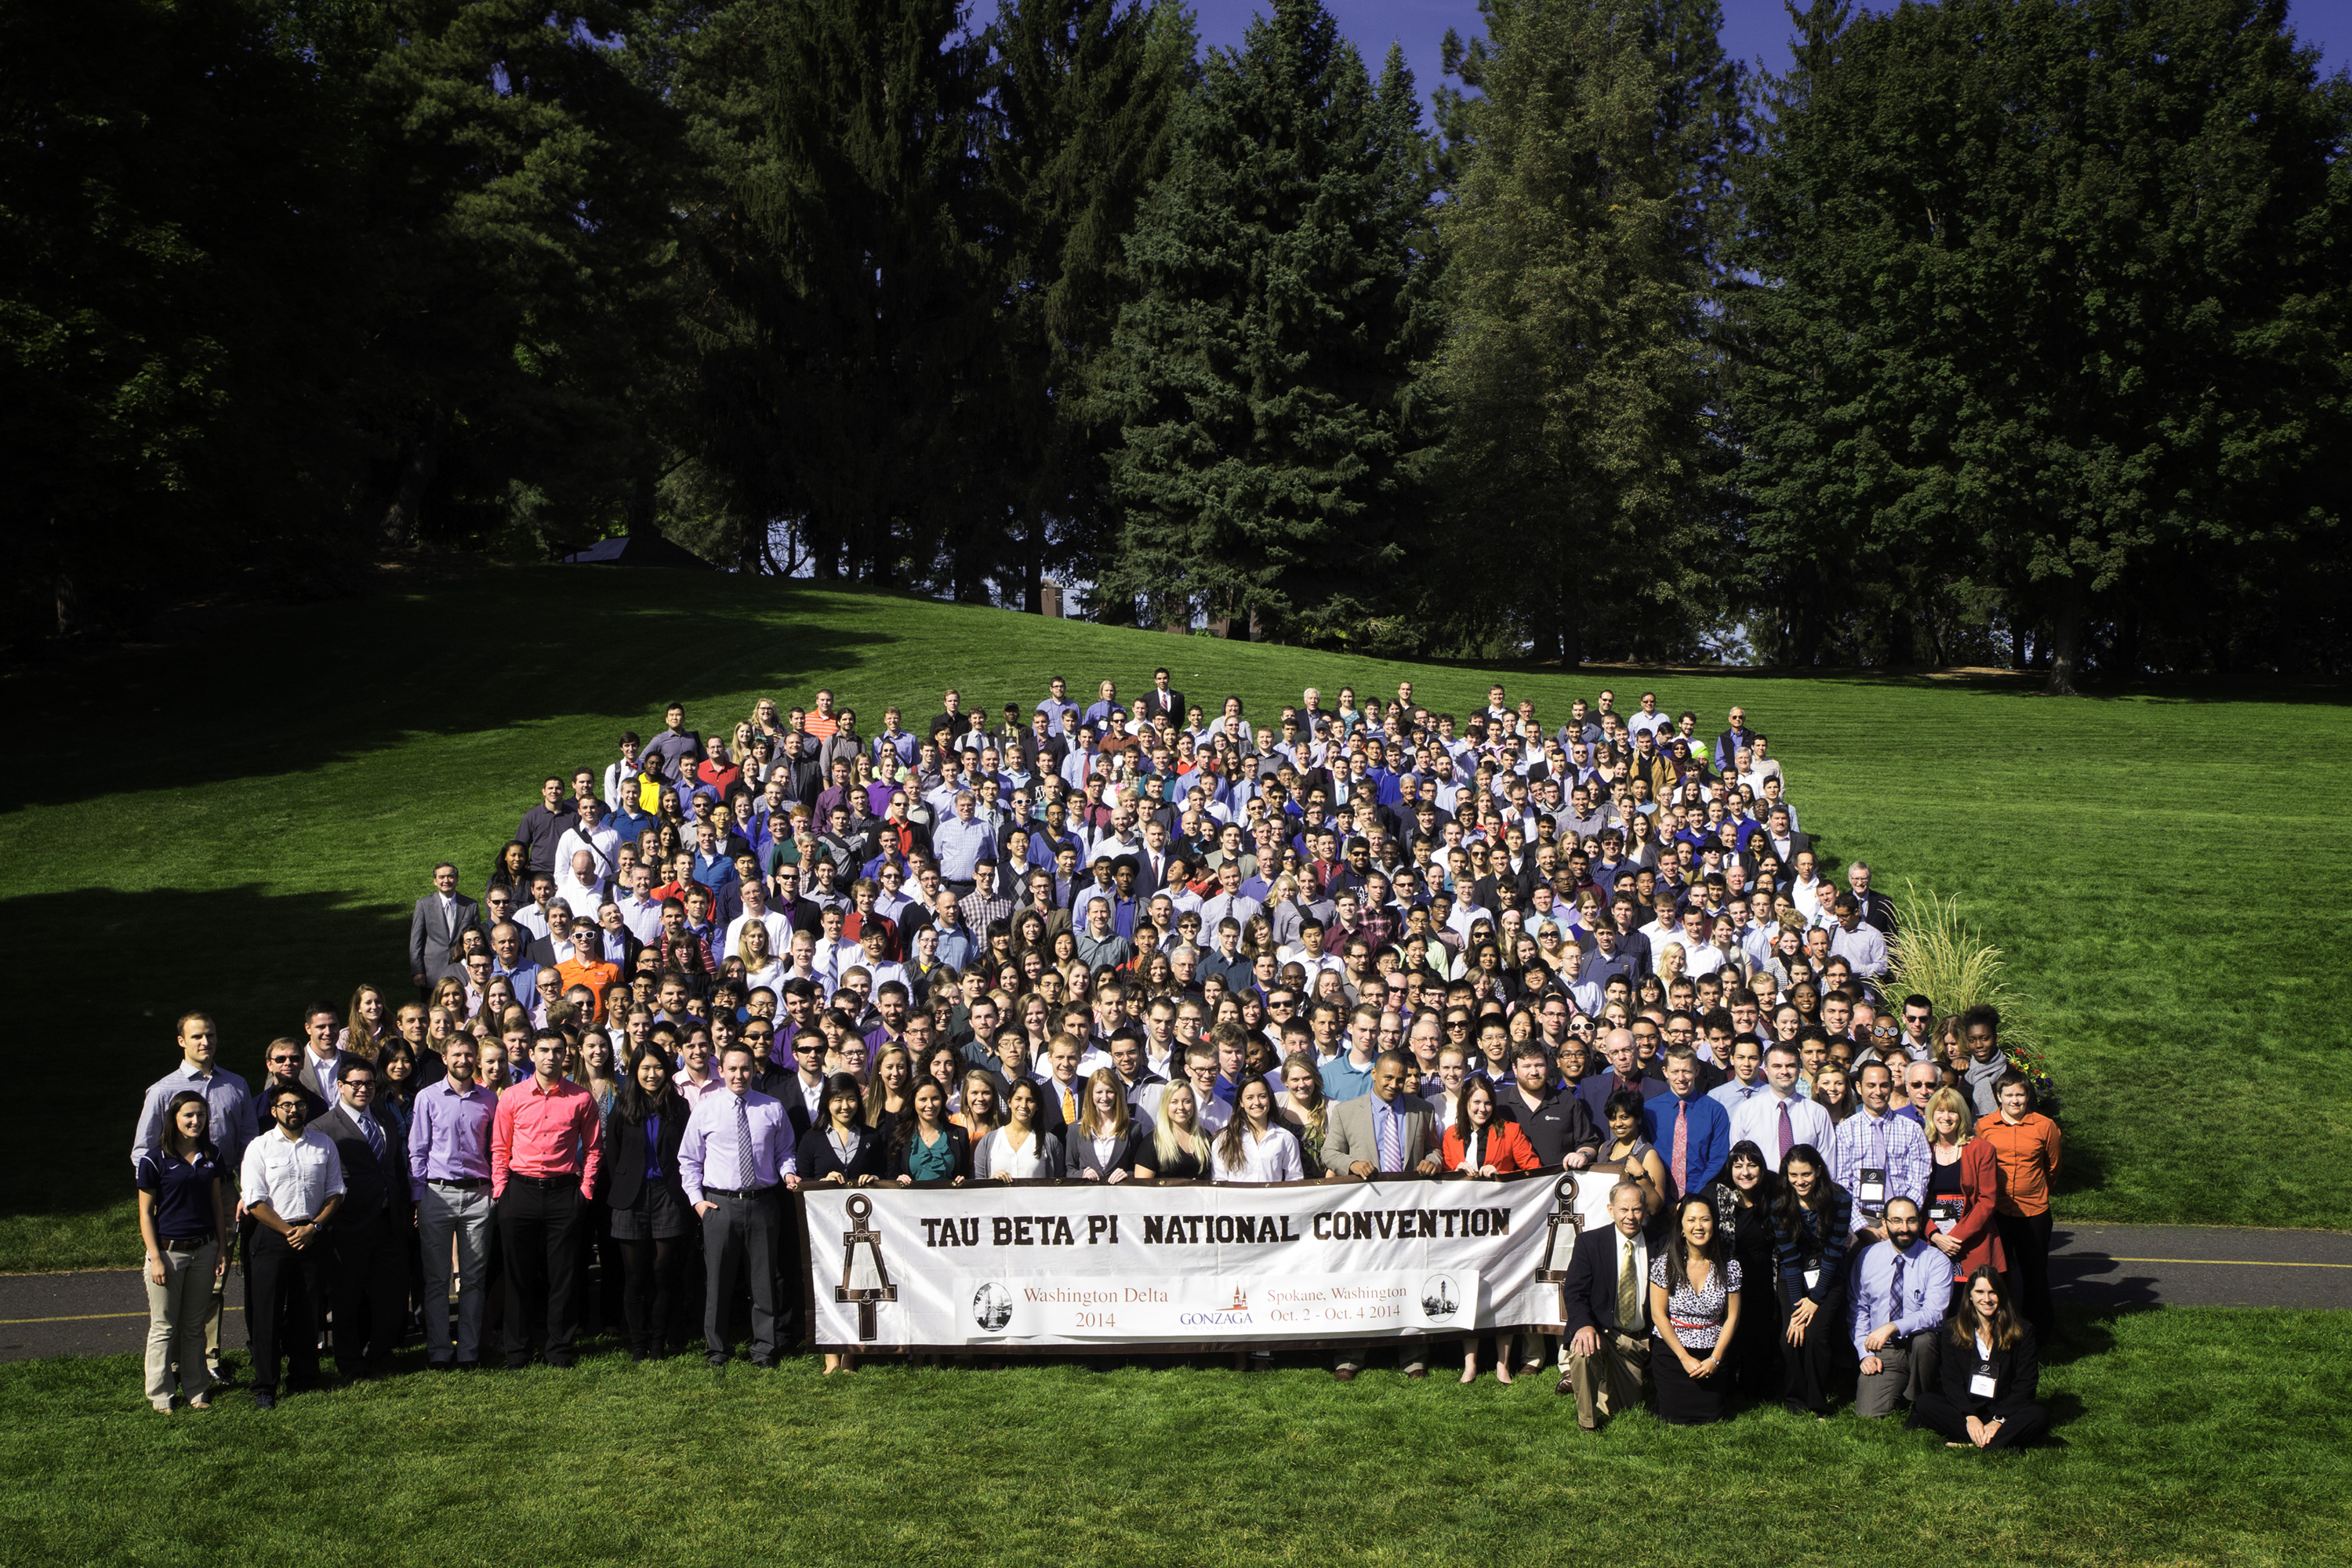 Group photo at 2014 Tau Beta Pi Convention in Spokane WA